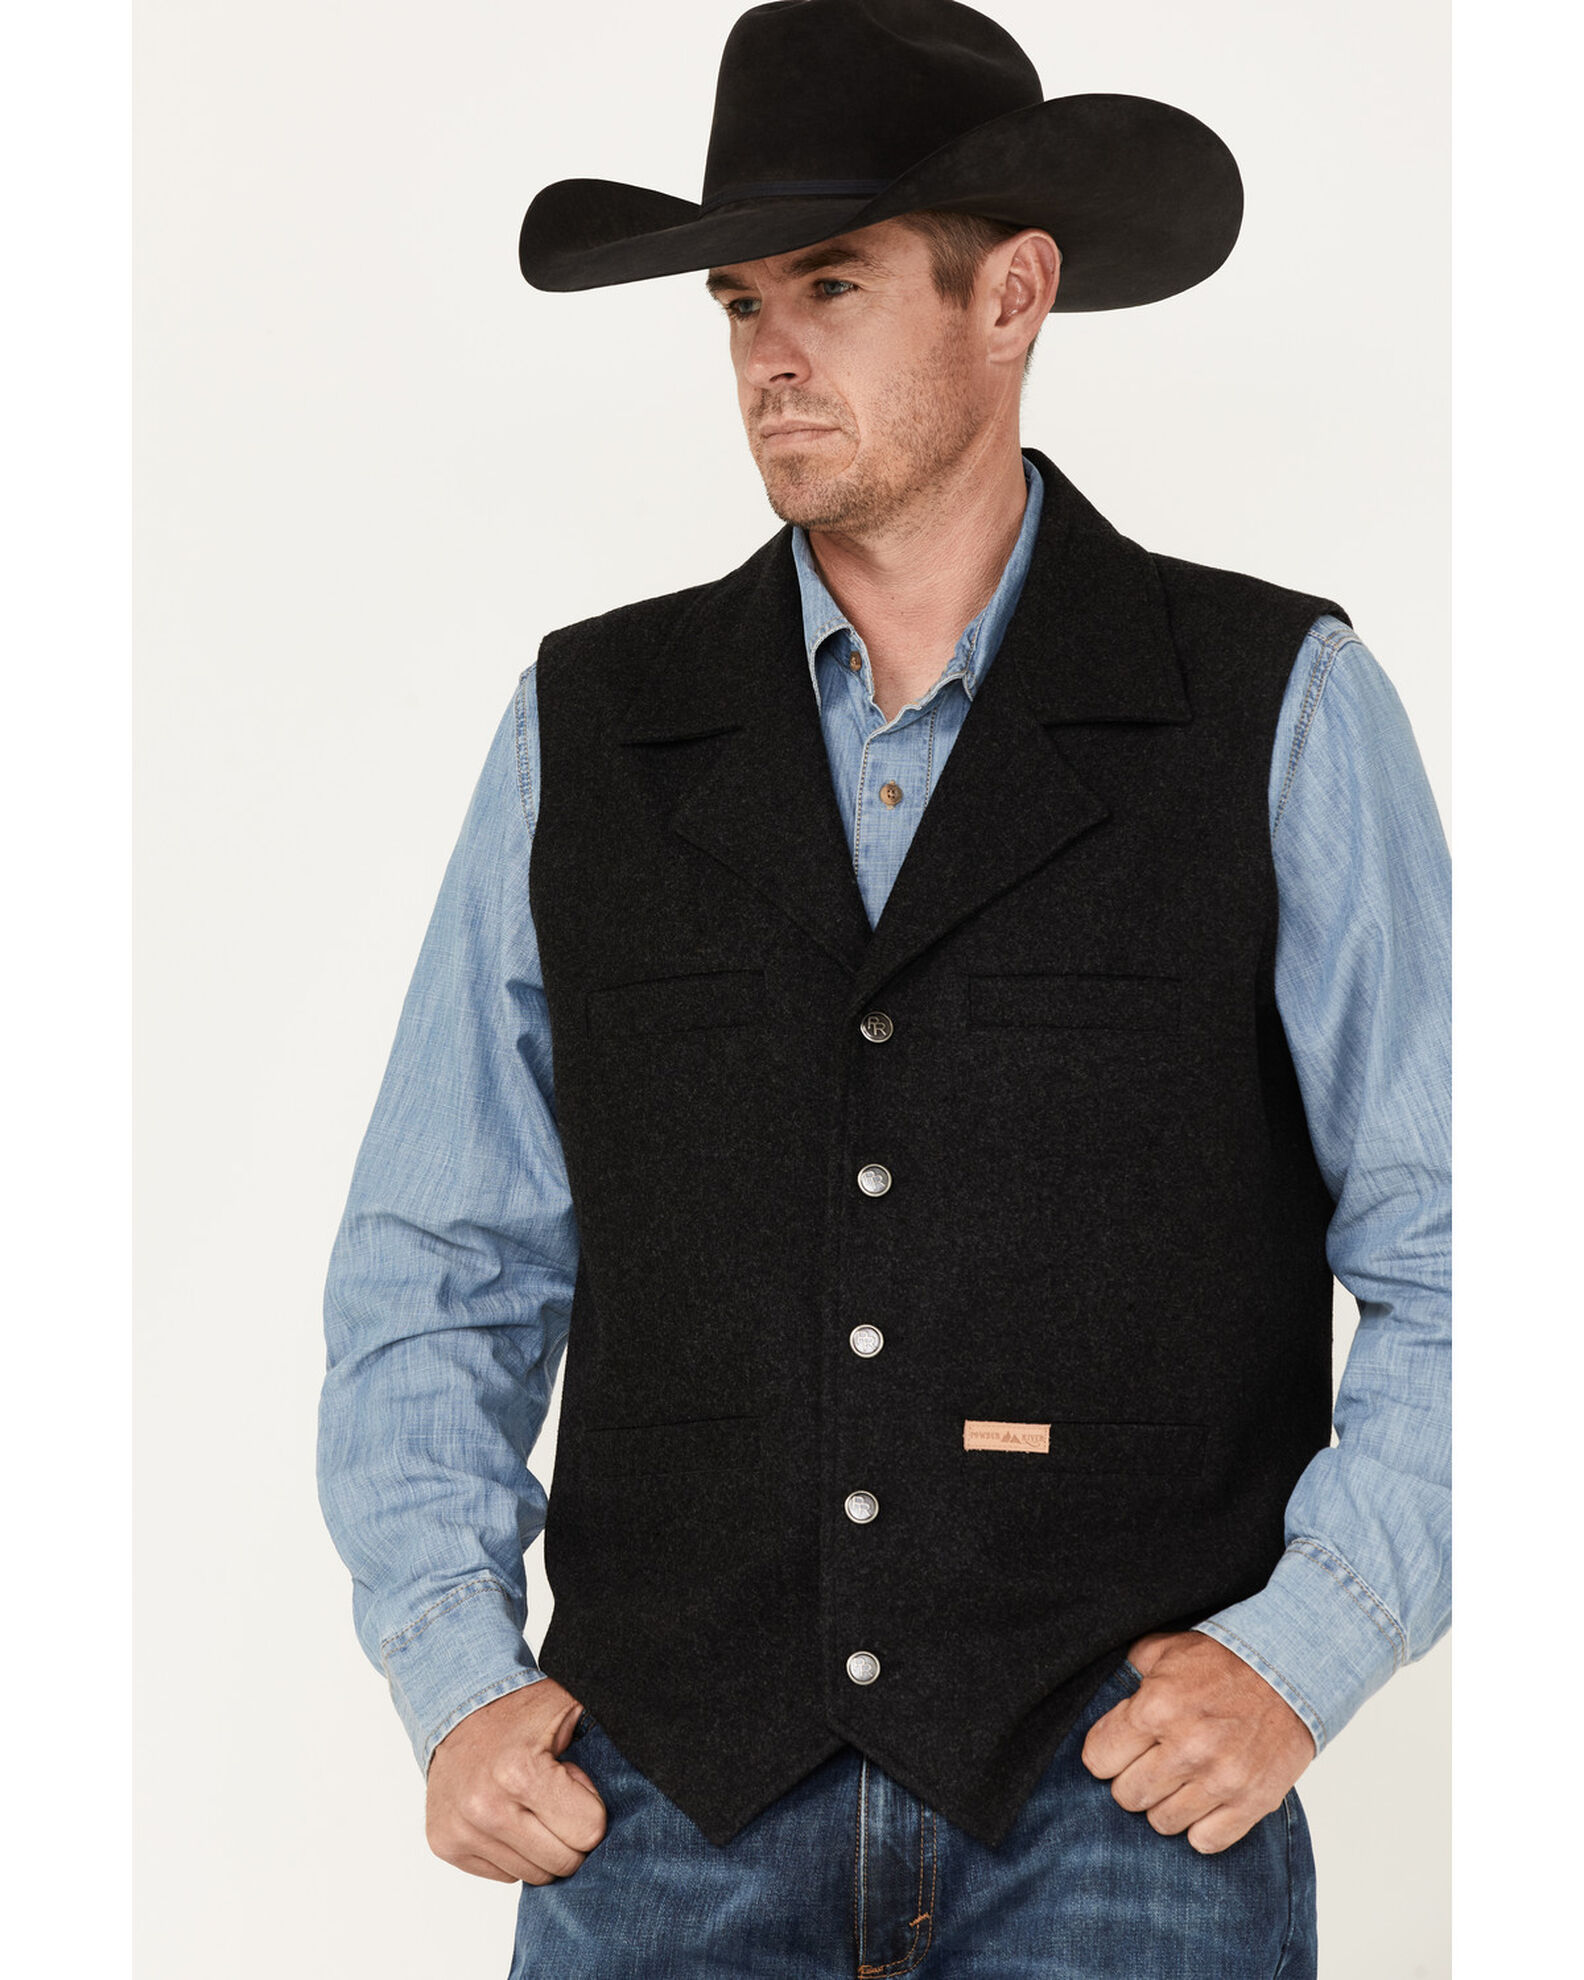 Powder River Outfitters Conceal Carry Cotton Canvas Vest- Black